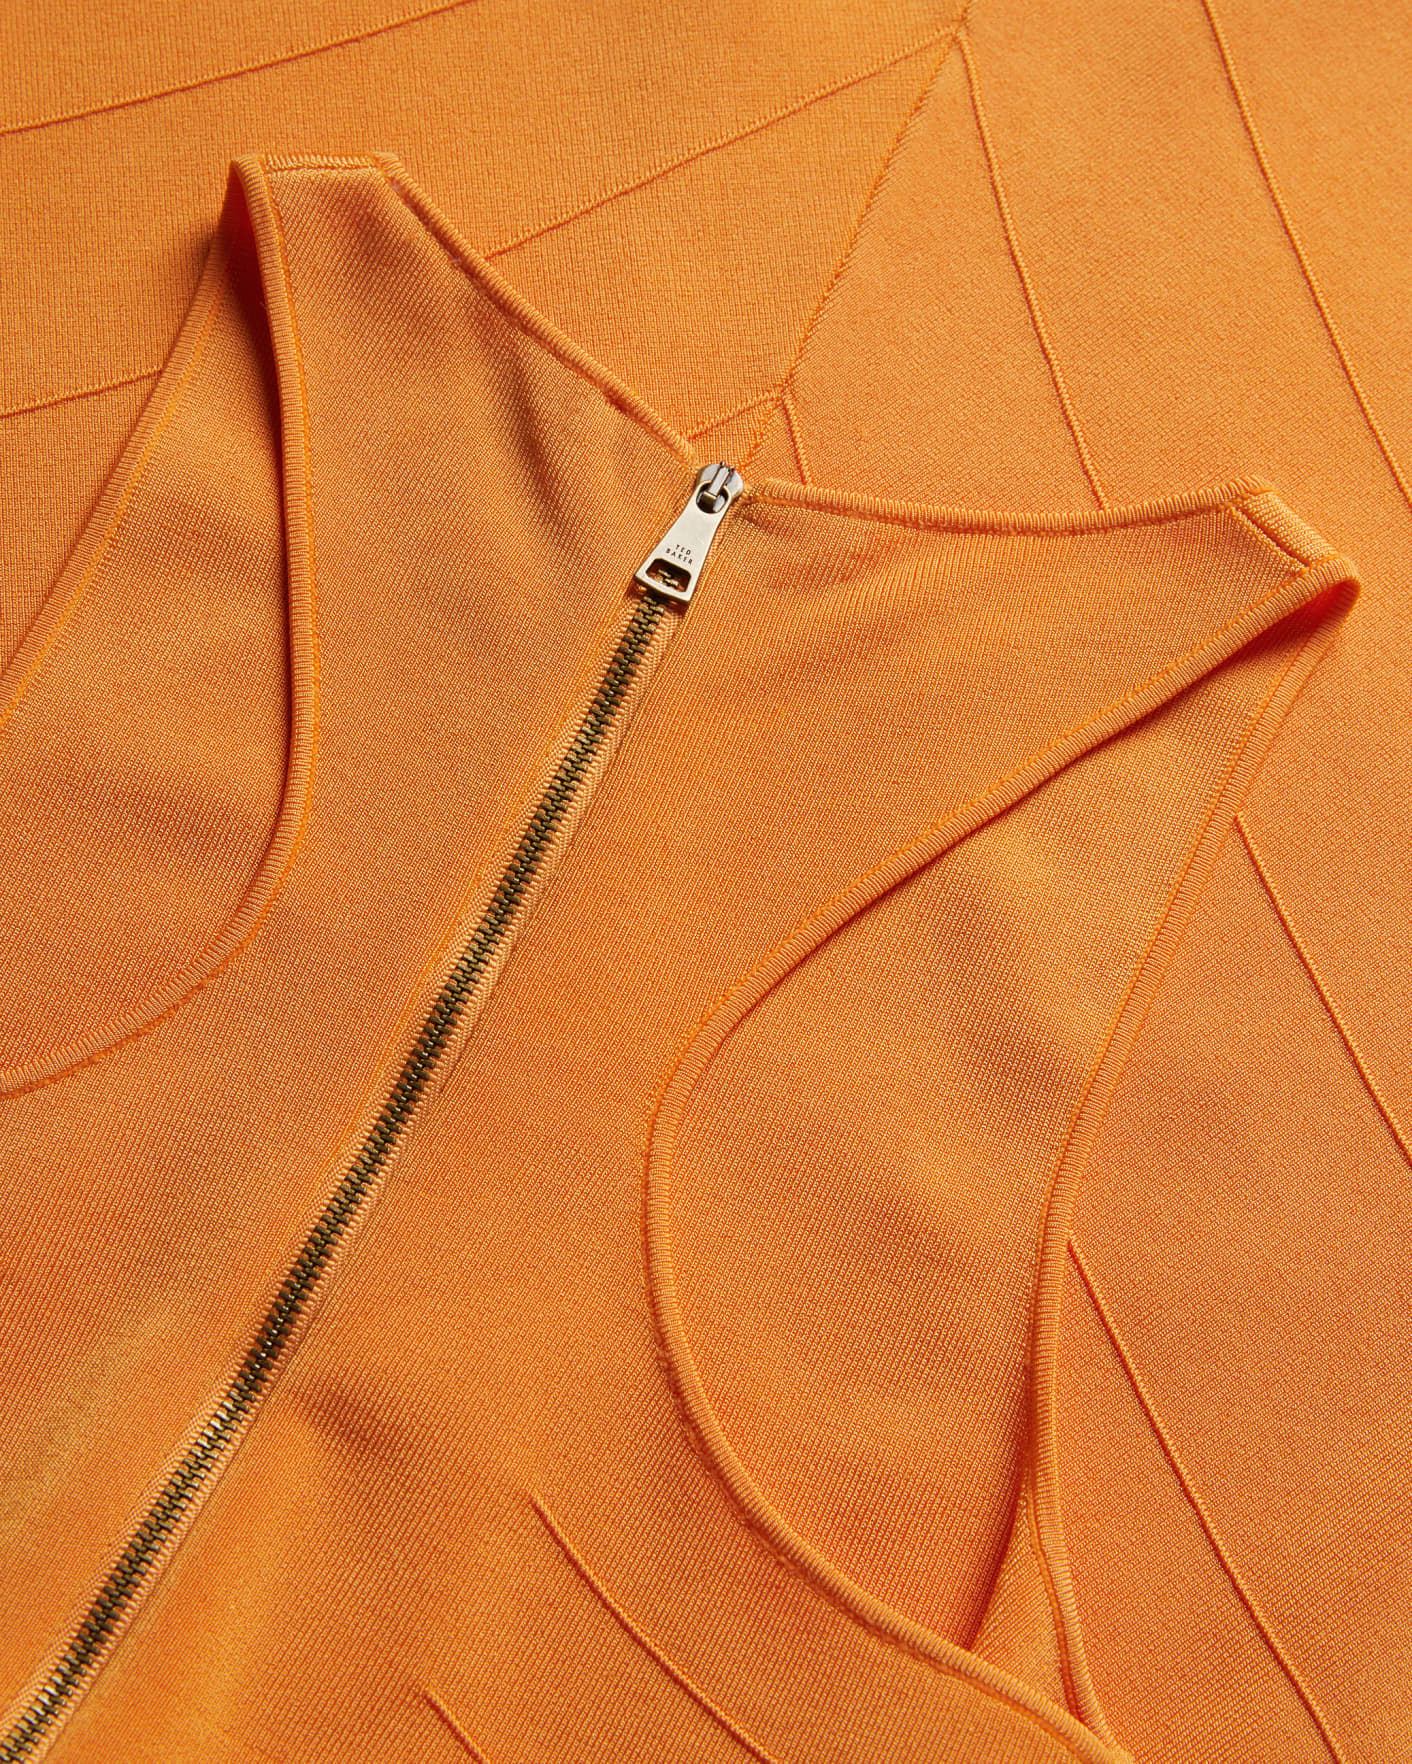 Dark Orange Rayon Flippy Knit Dress Ted Baker